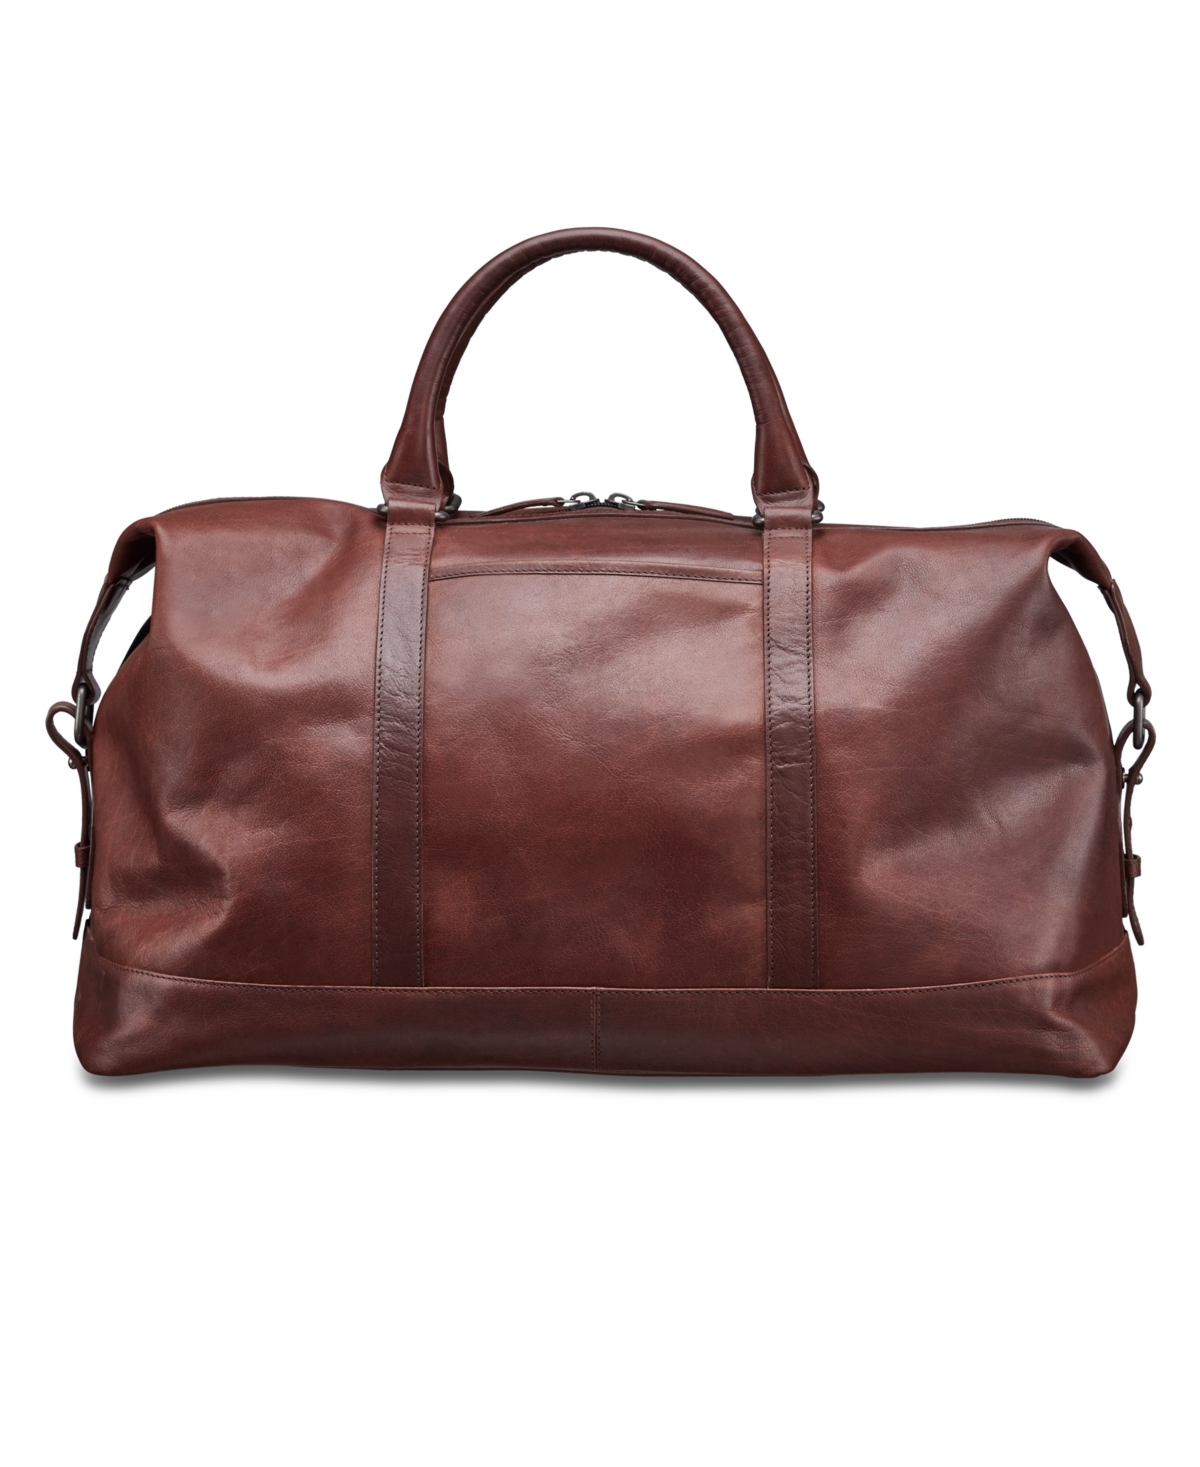 Buffalo Collection Carry on Duffle Bag - Brown